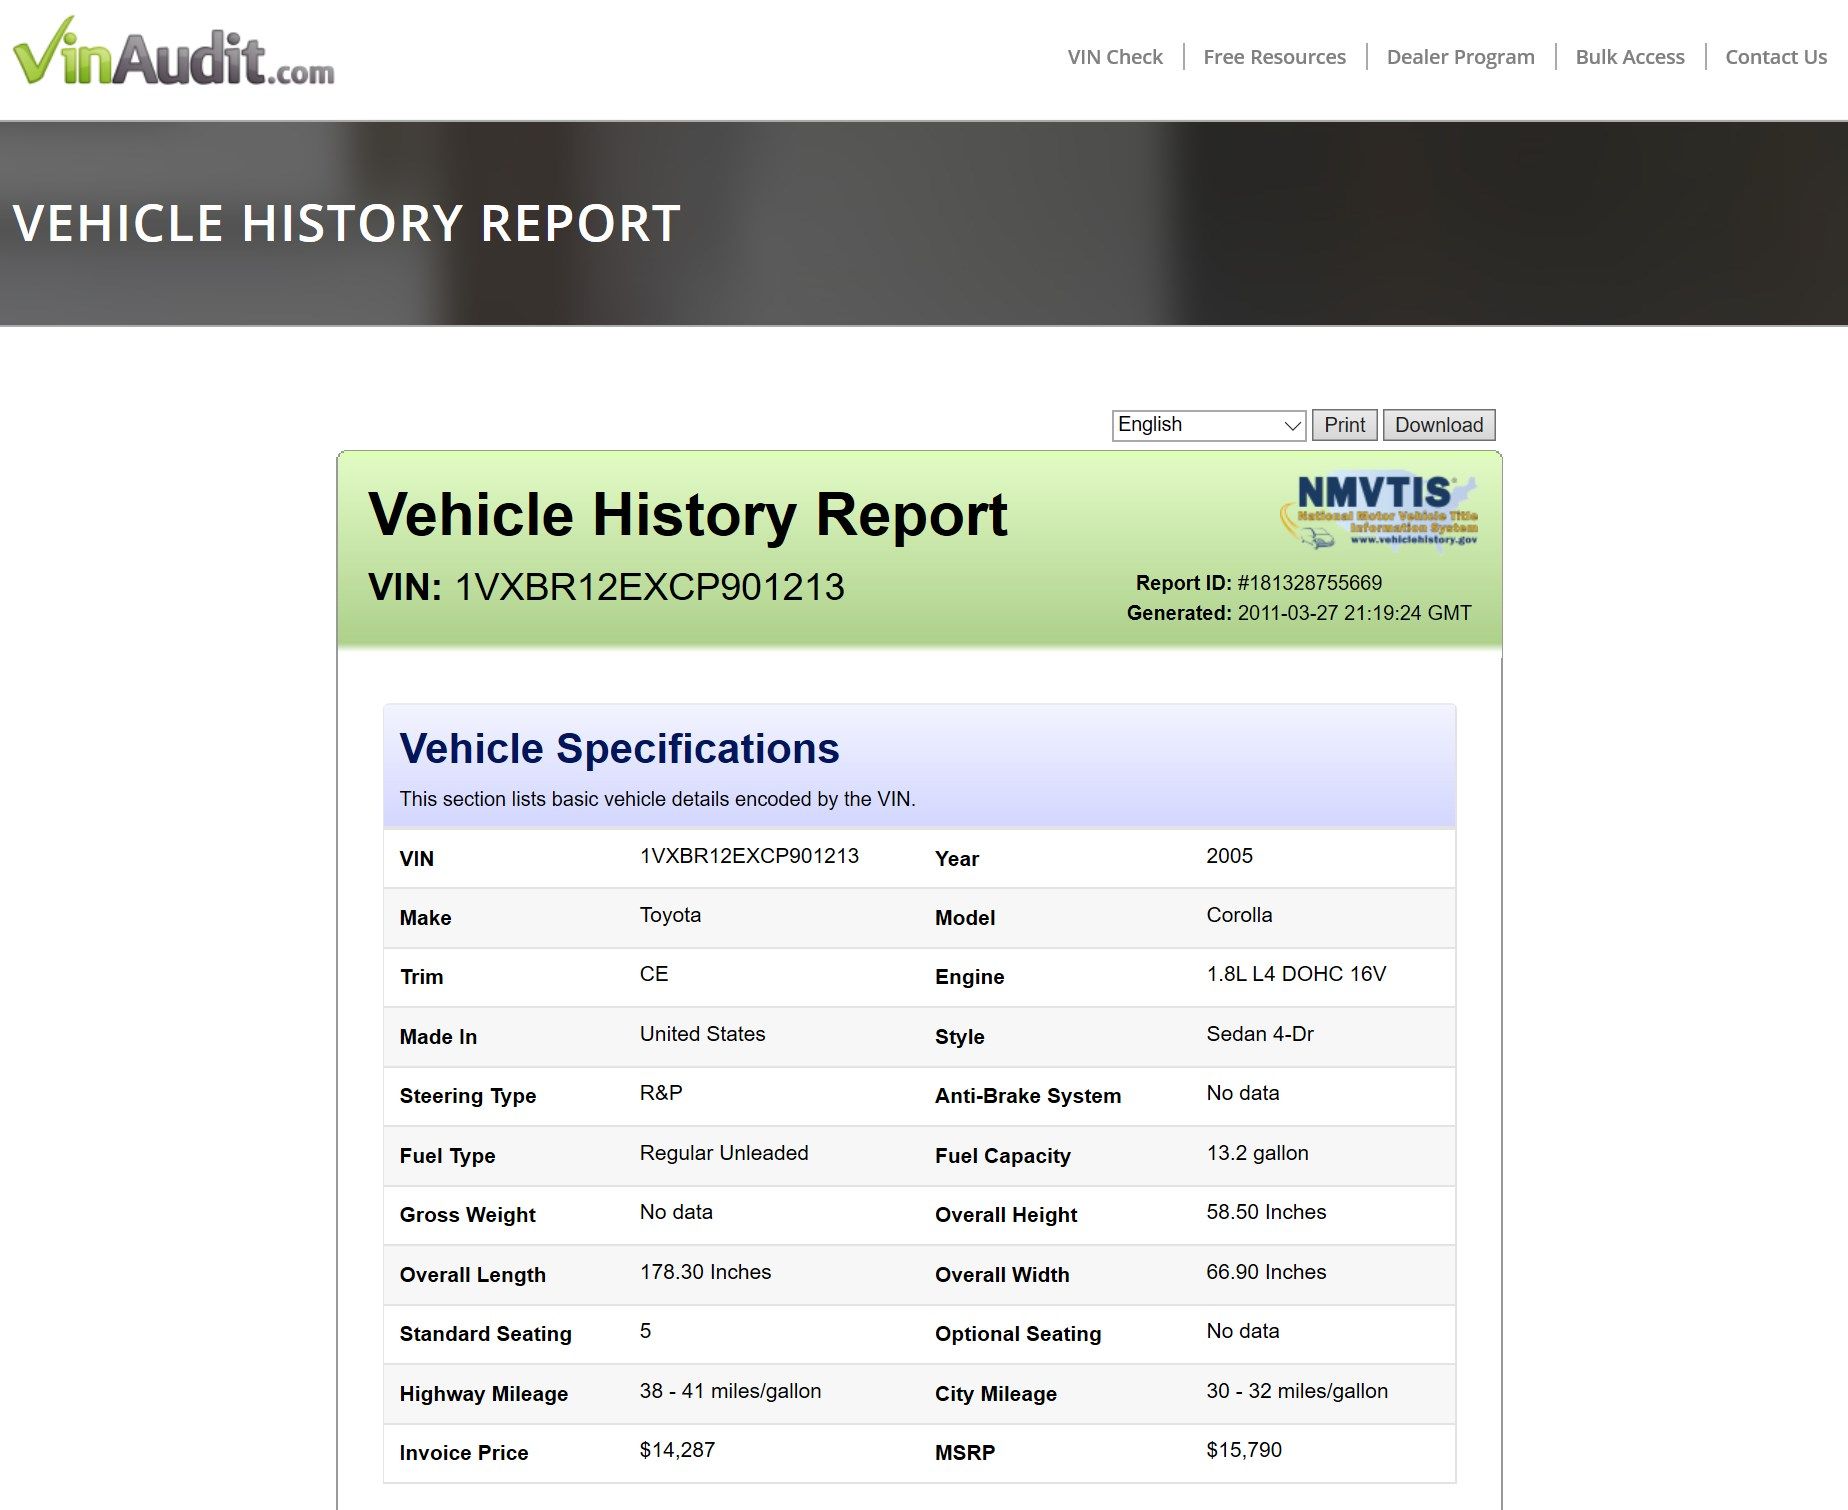 VinAudit vehicle history reports